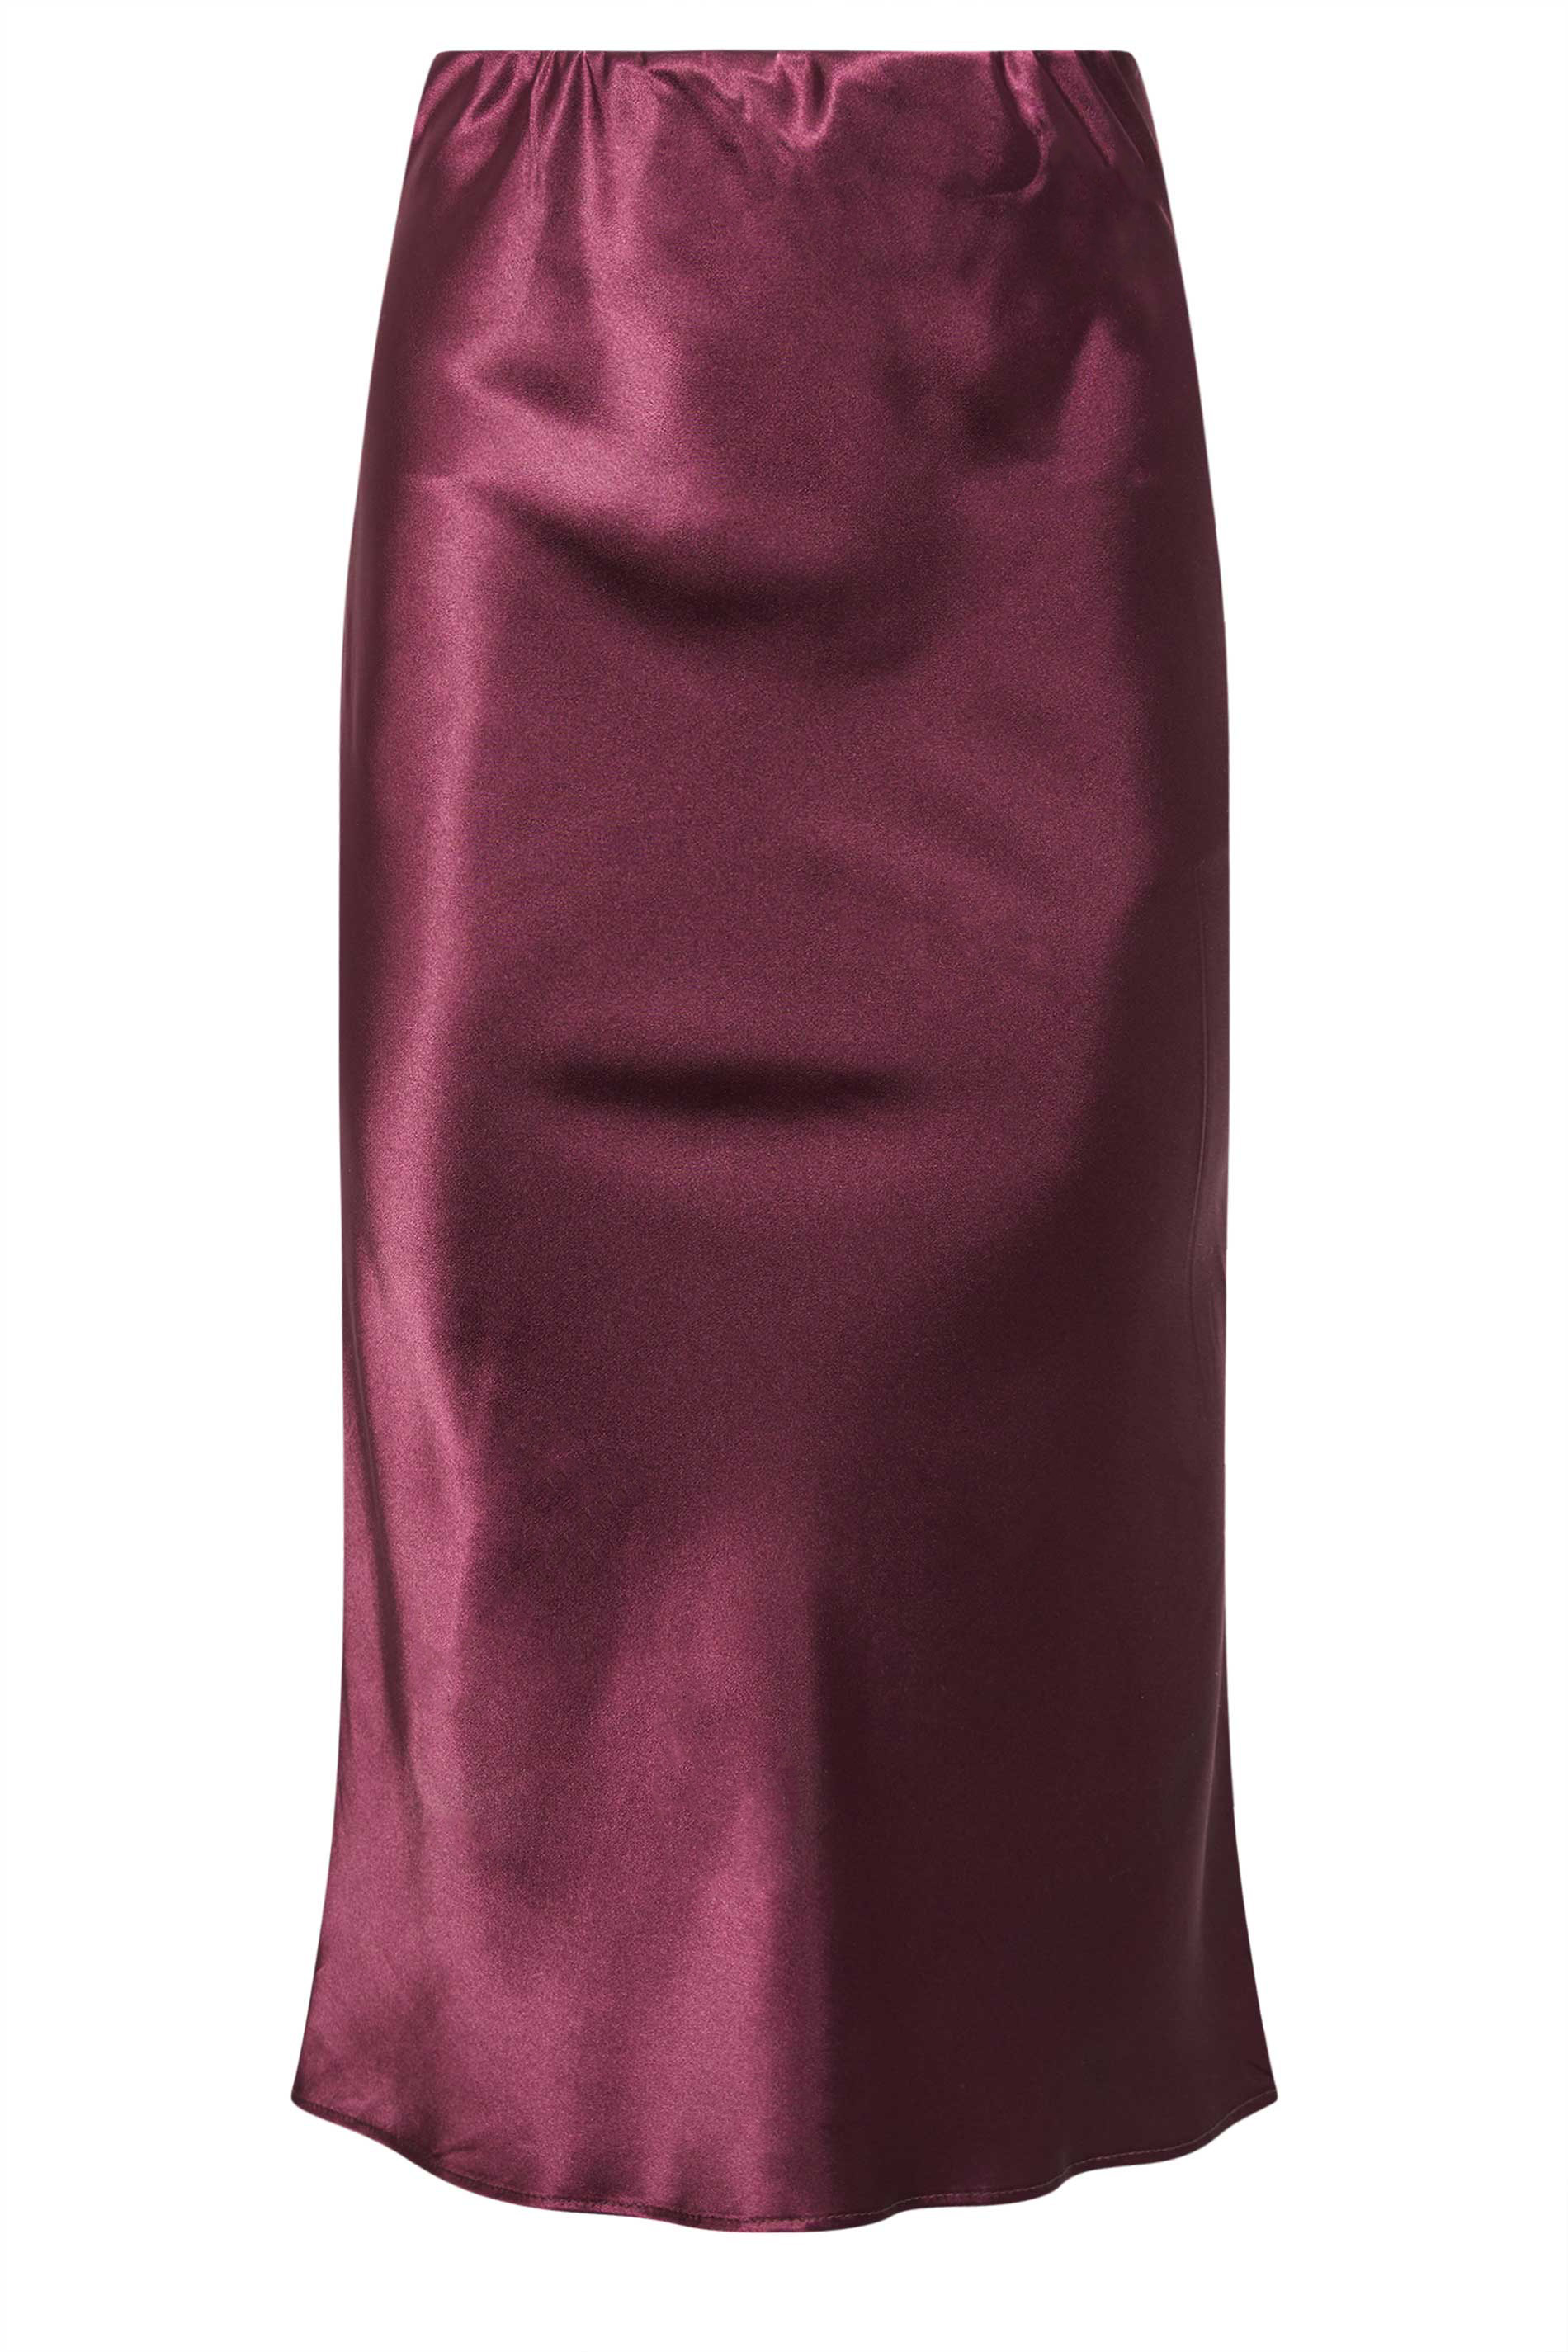 PixieGirl Dark Purple Satin Midaxi Skirt | PixieGirl